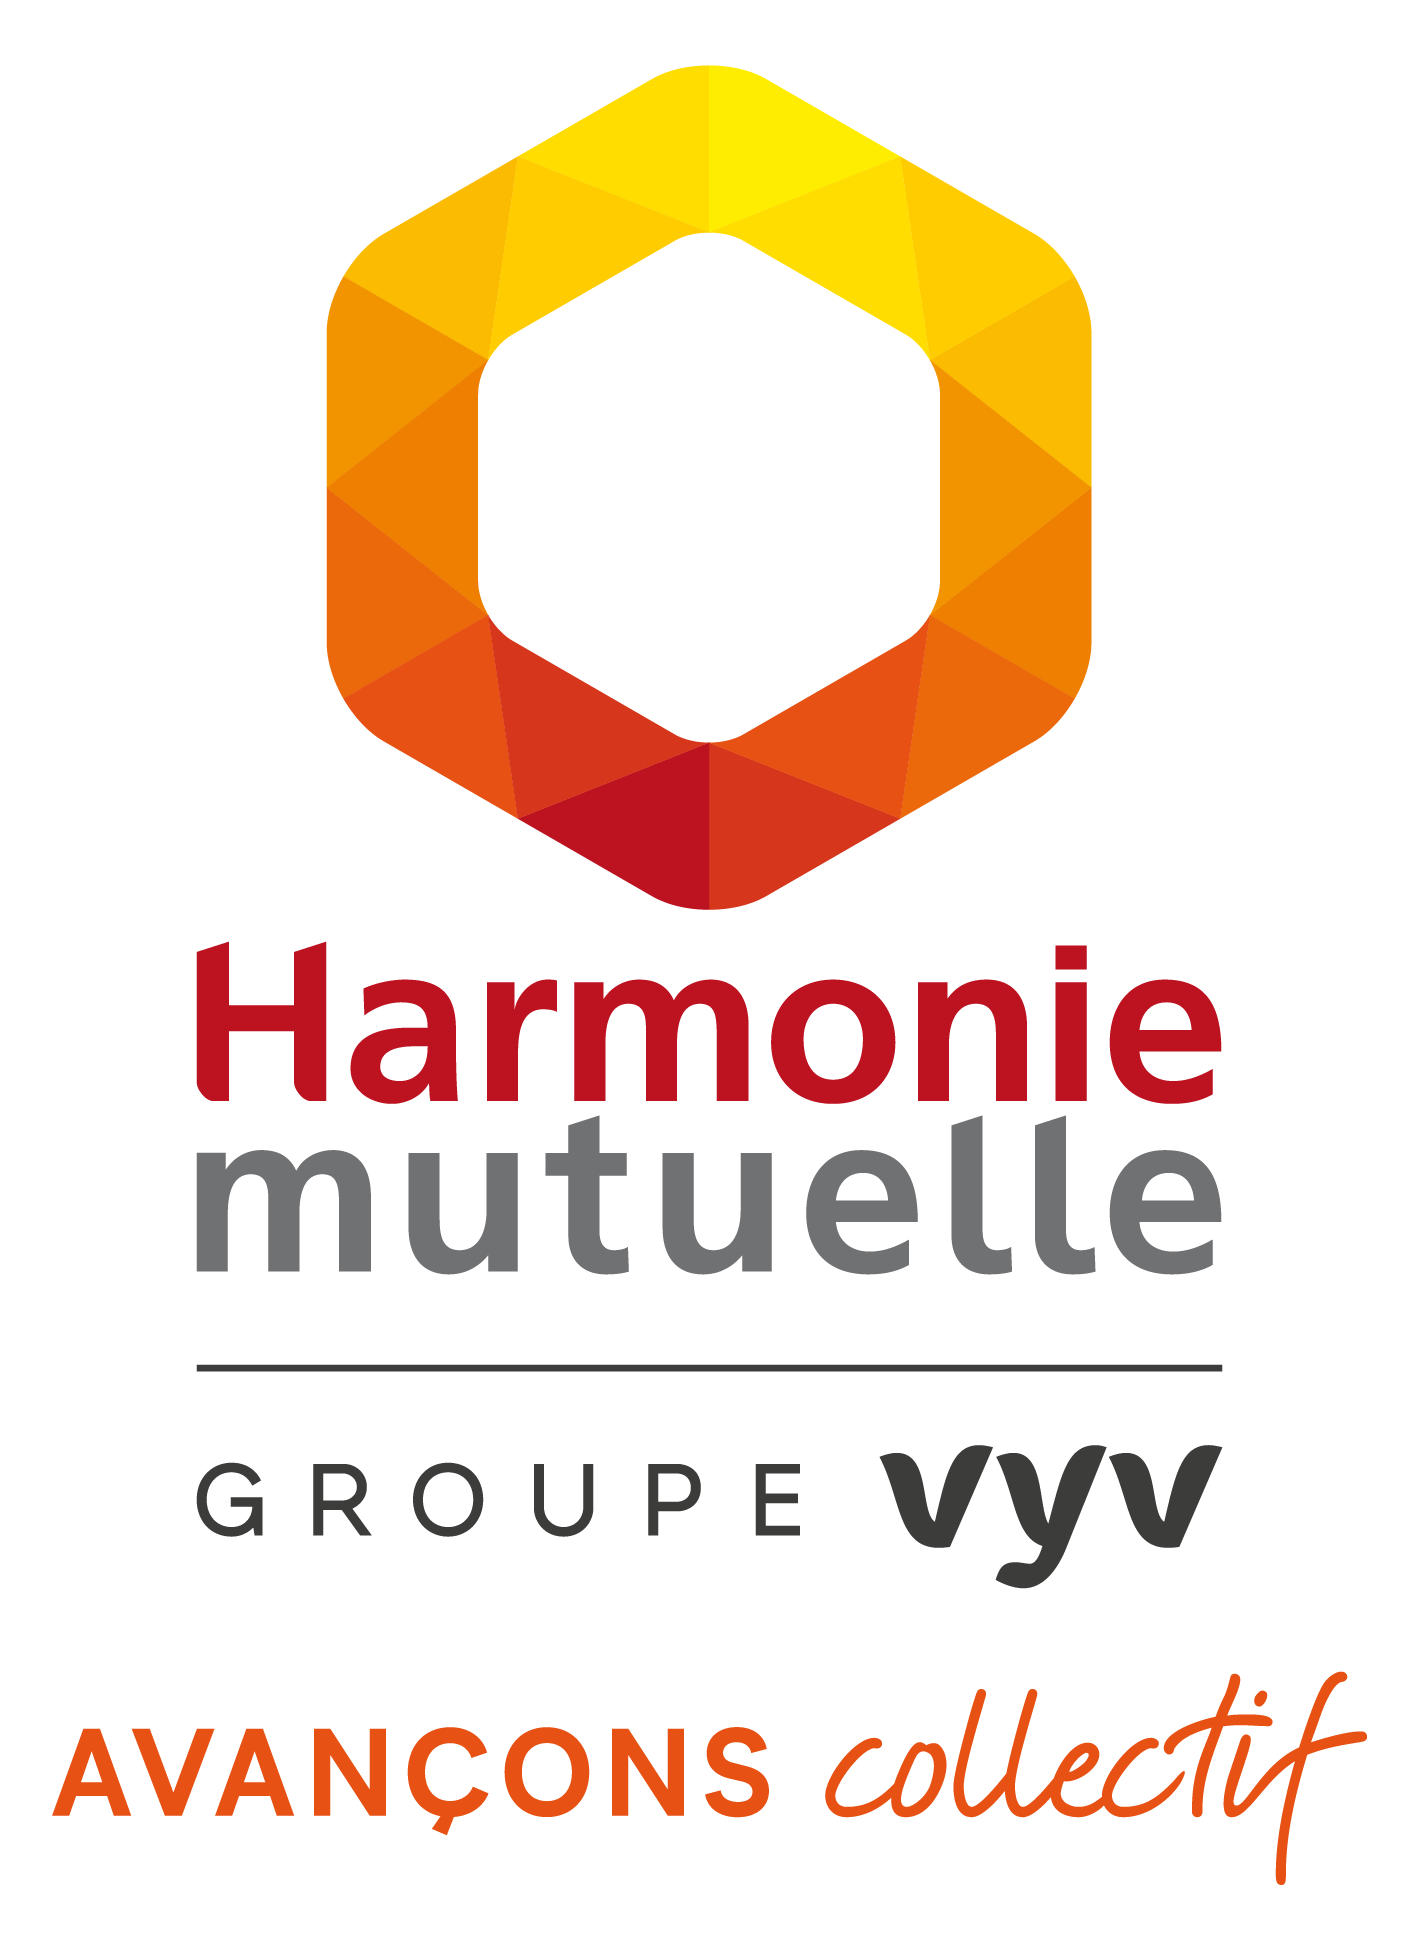 Harmonie mutuelle www.harmonie-mutuelle.fr (new window)